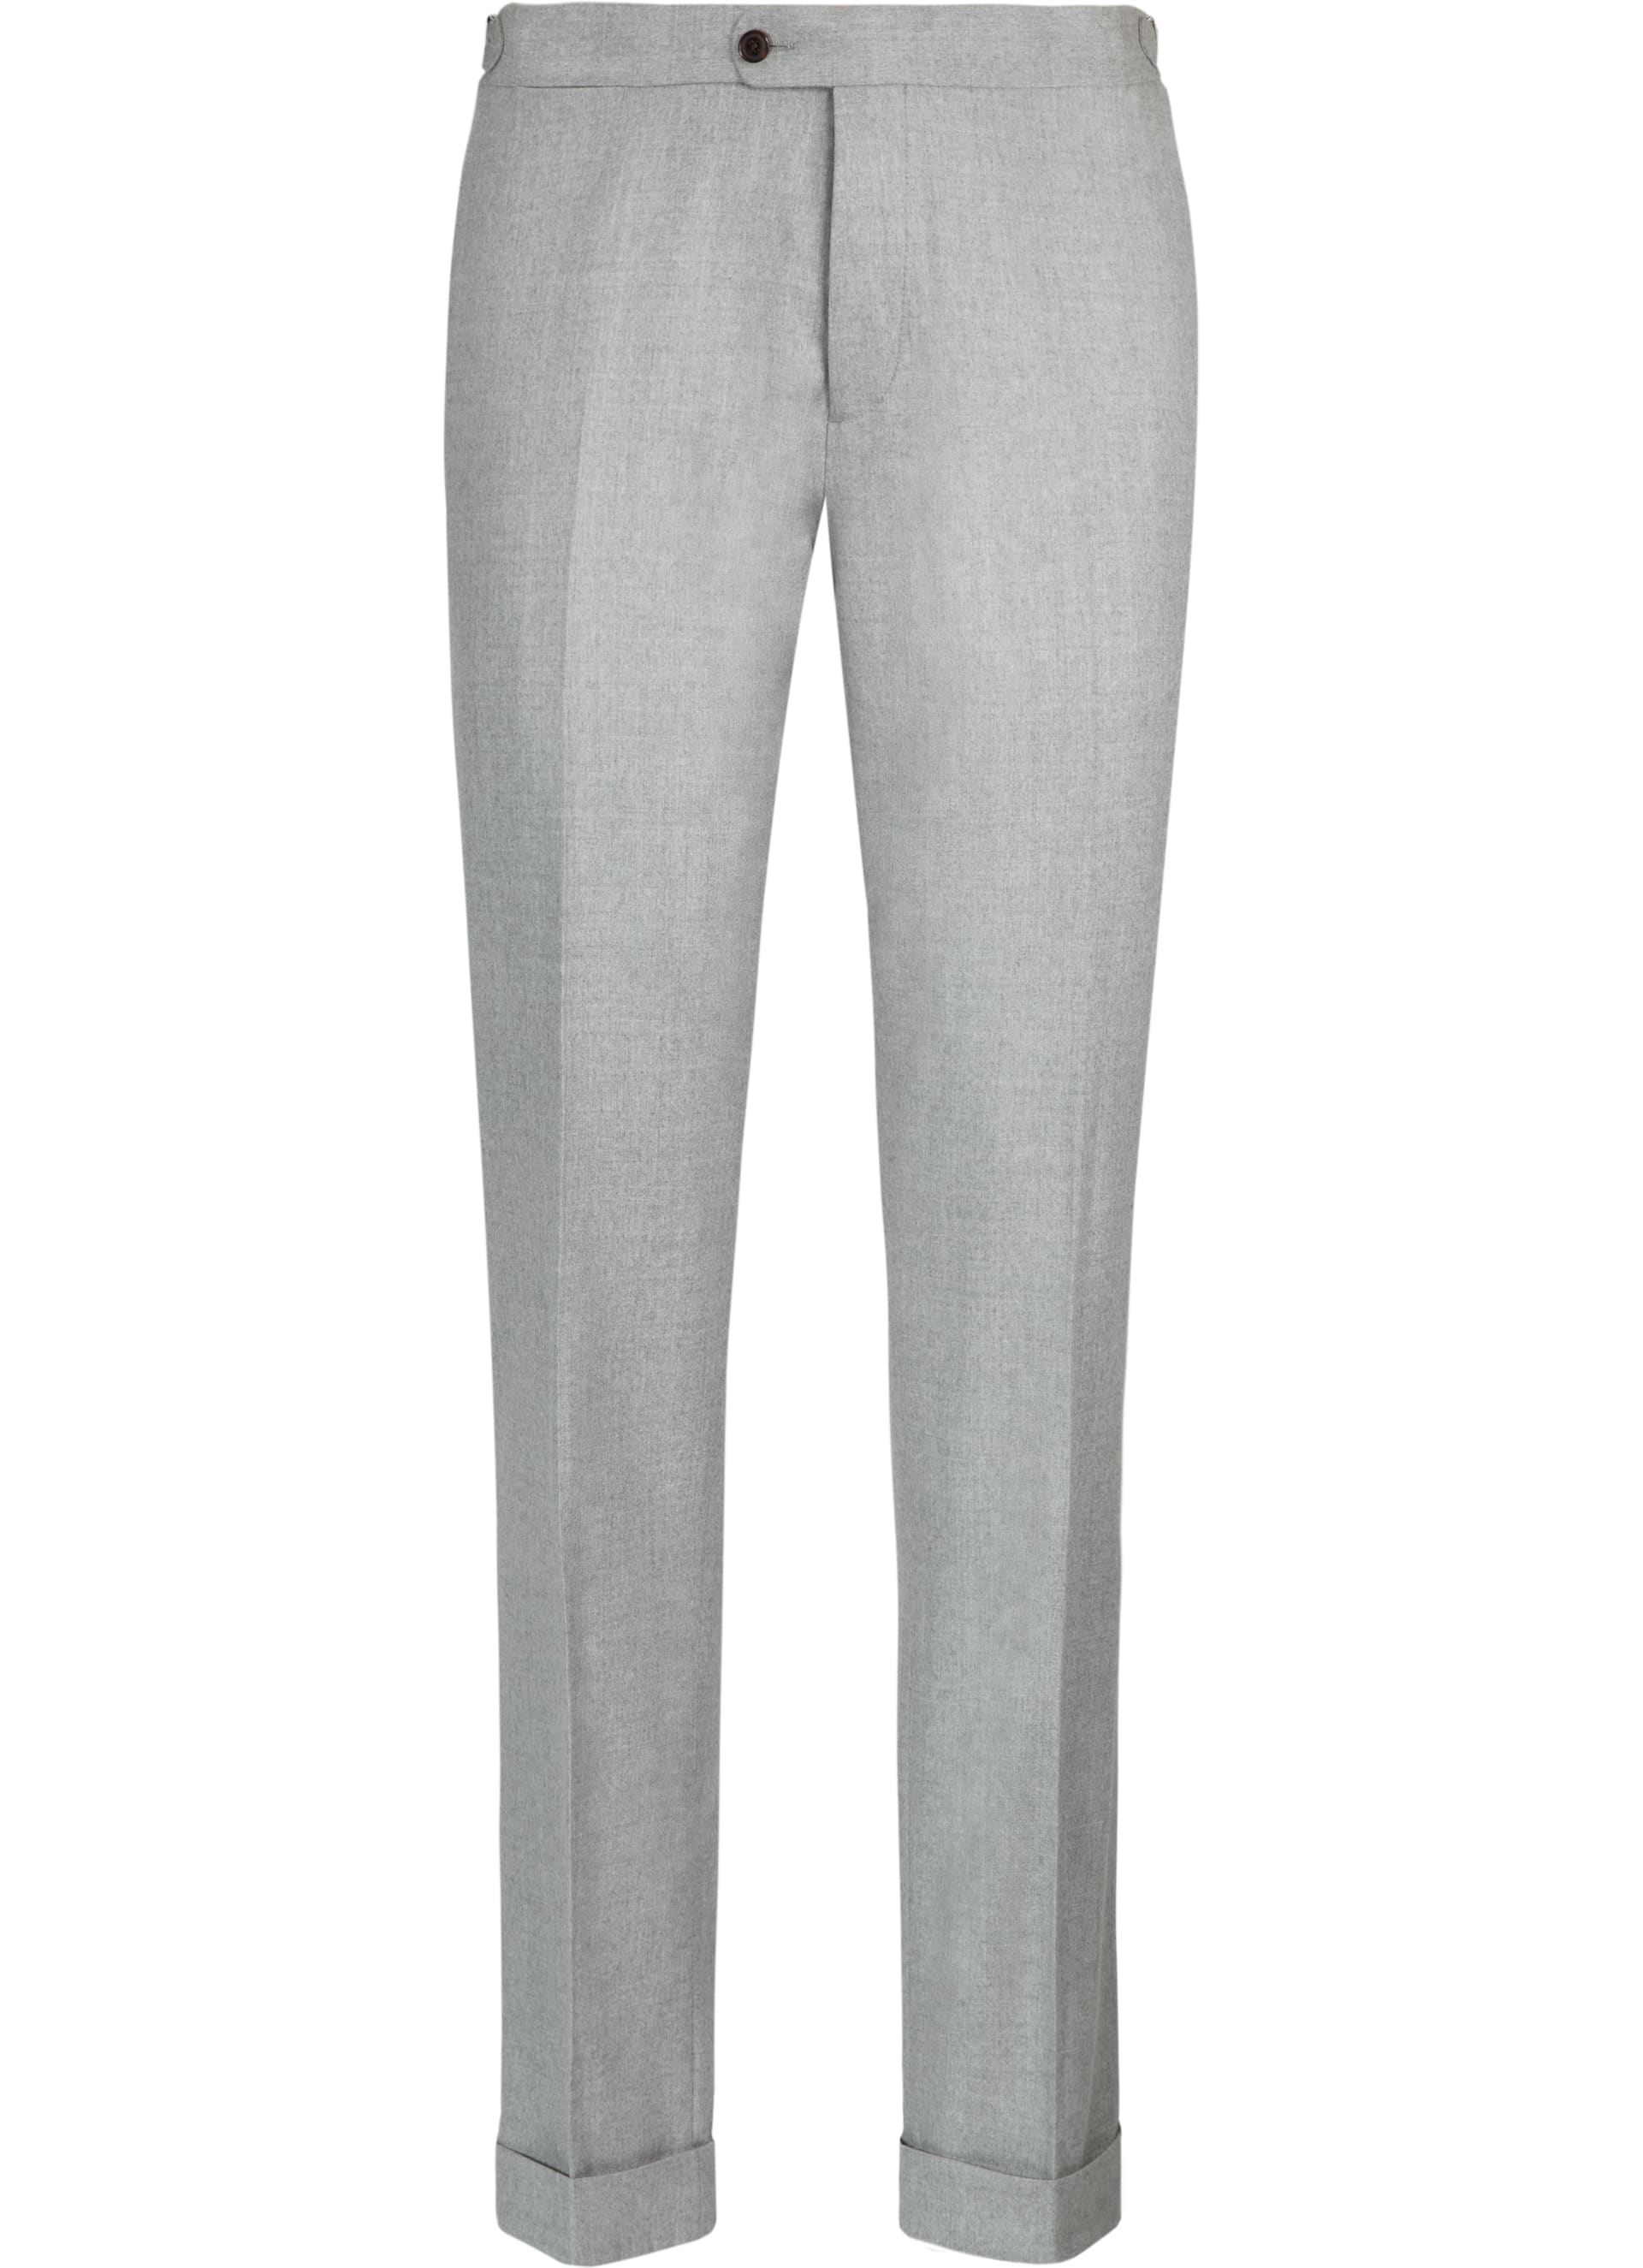 Jort Light Grey Fishtail Trousers B990i | Suitsupply Online Store